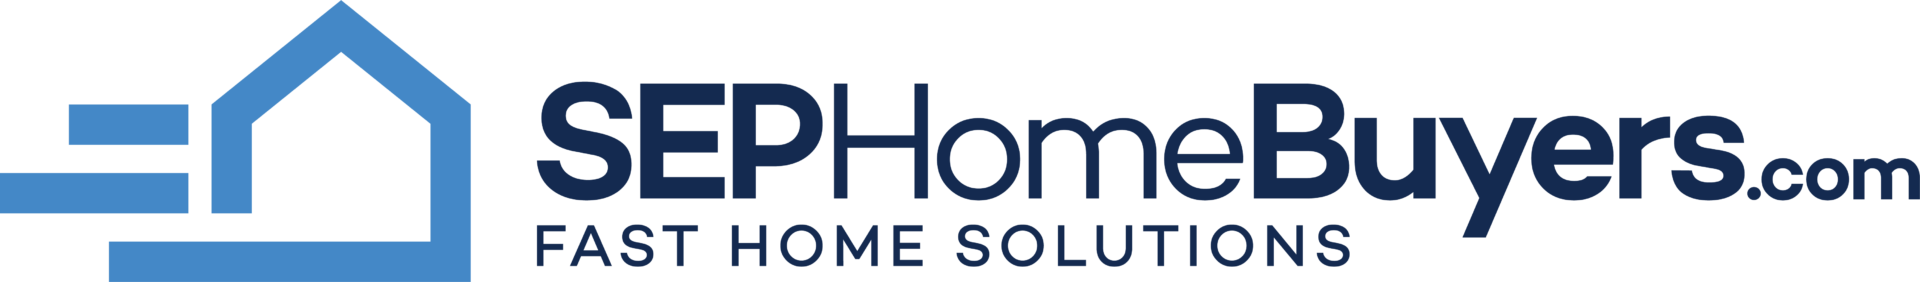 SEP Home Buyers logo